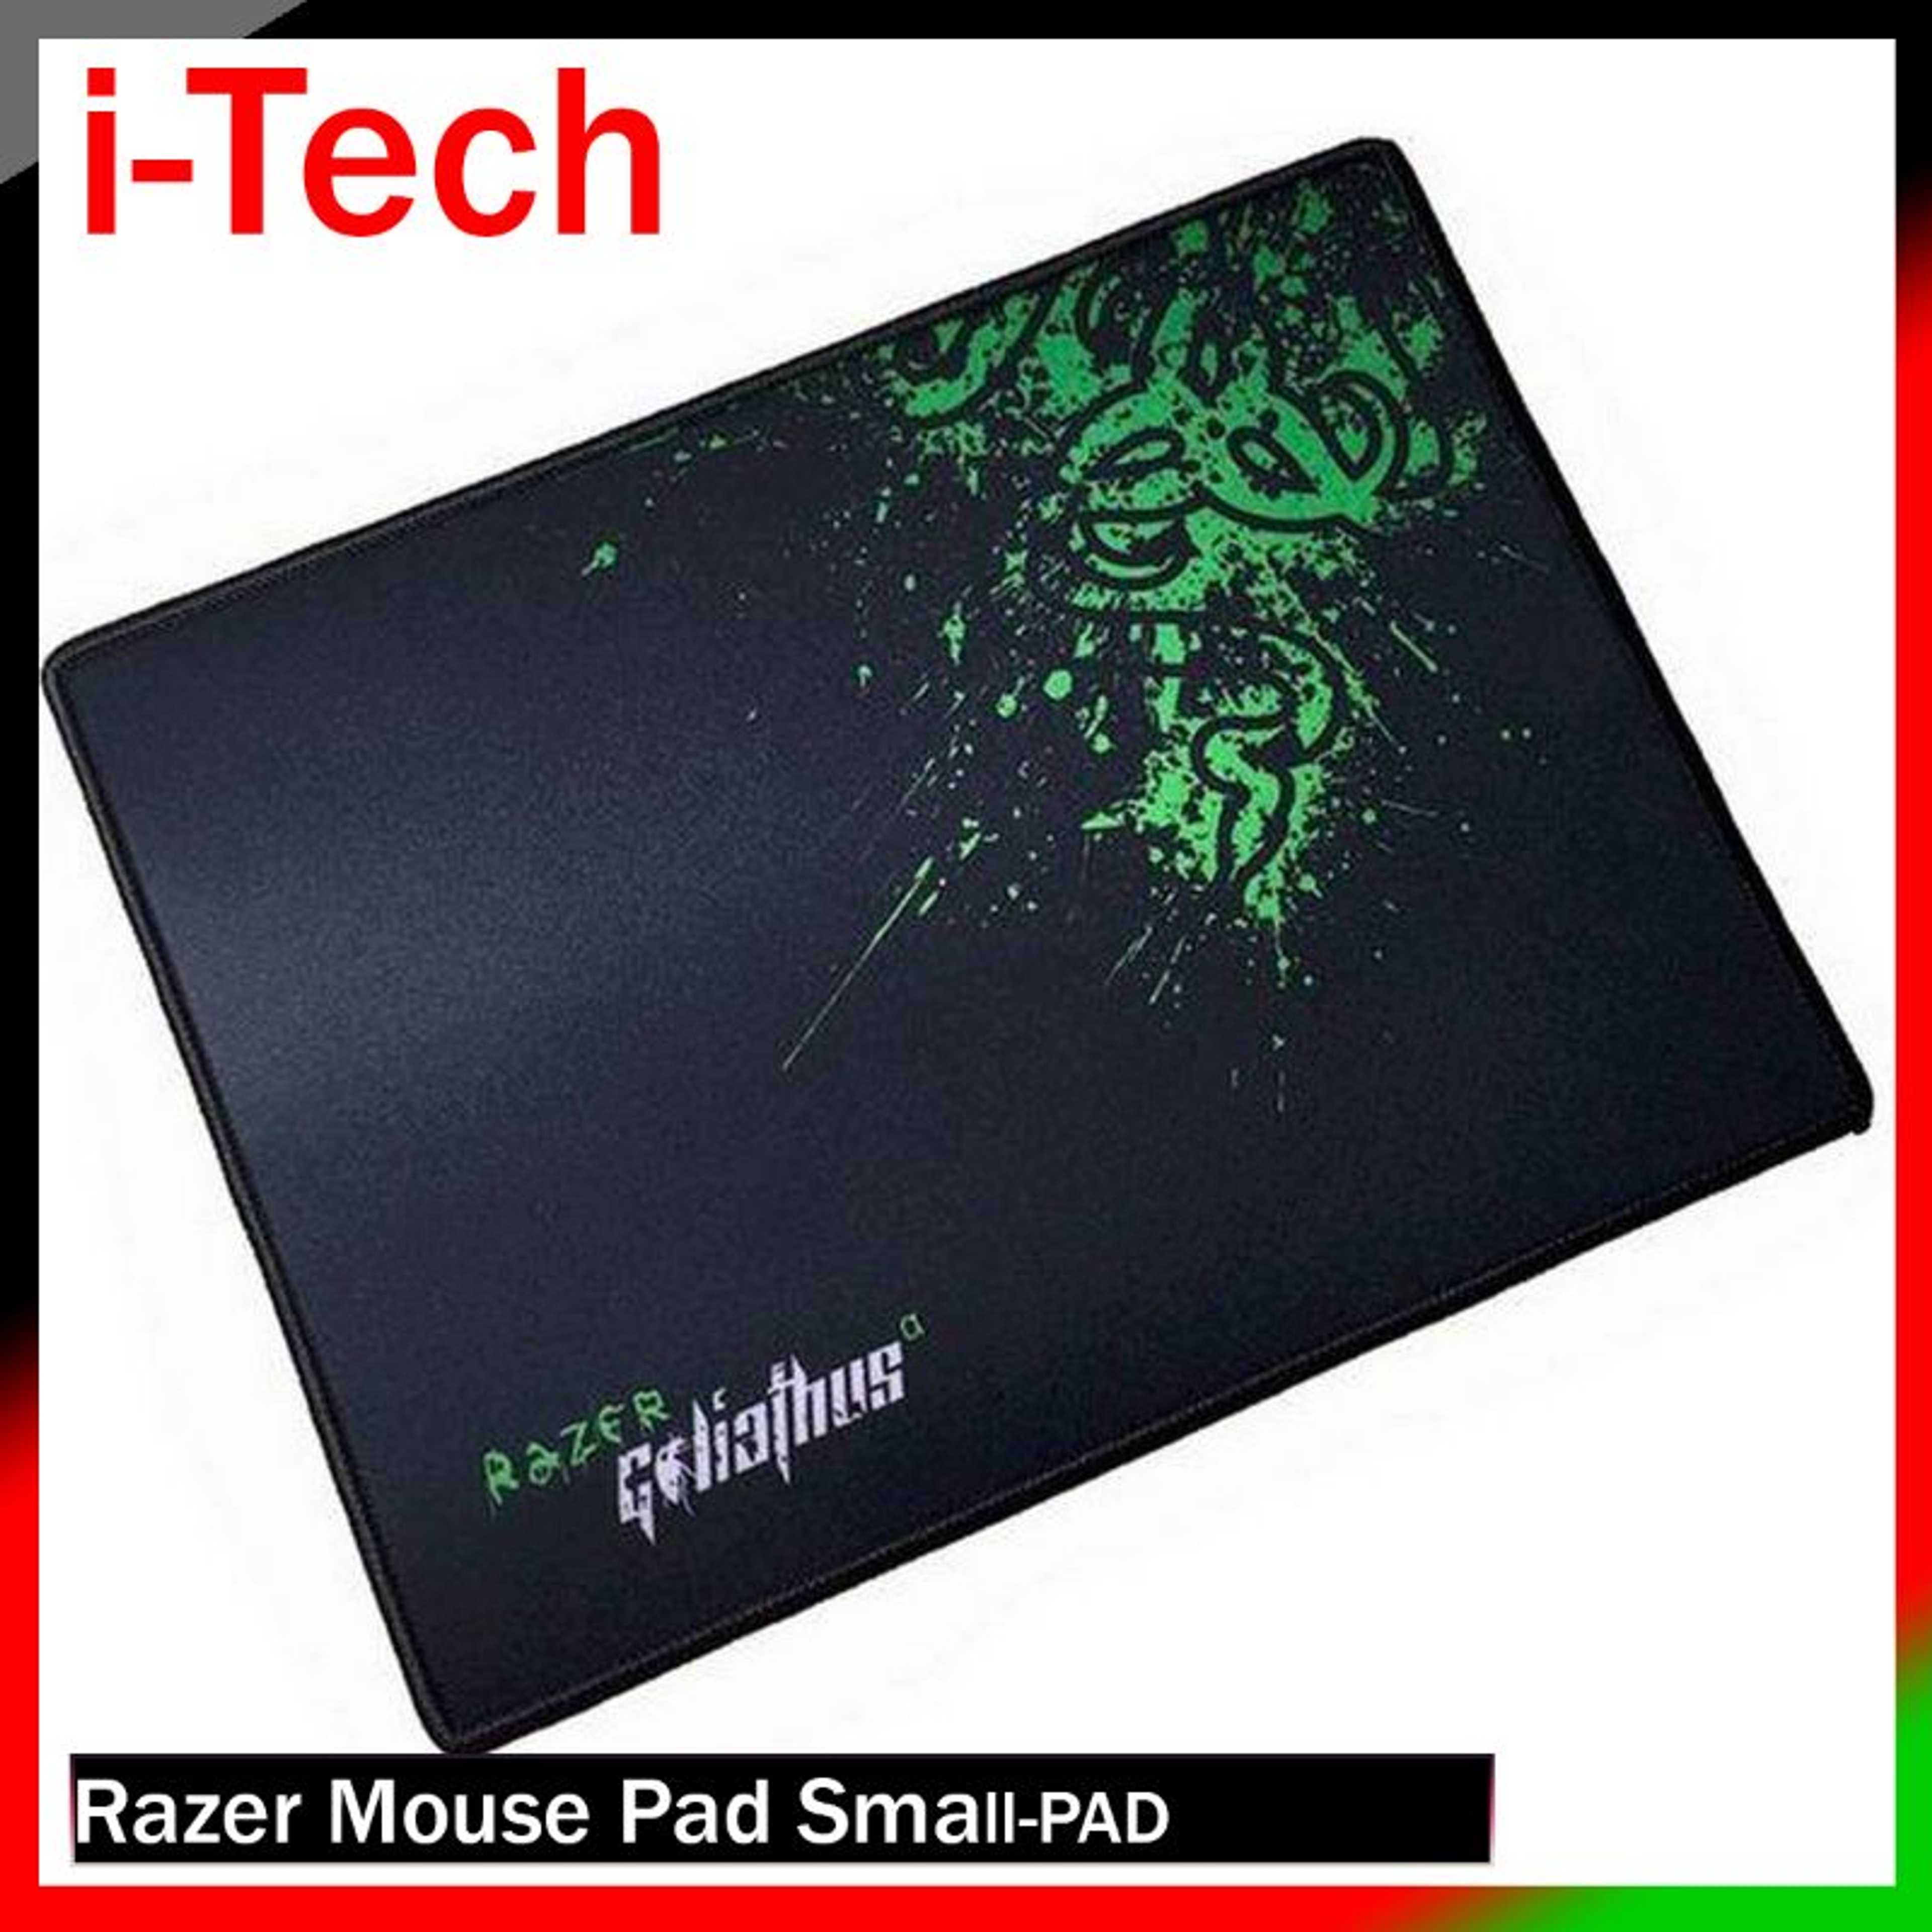 Razer Mouse Pad Small